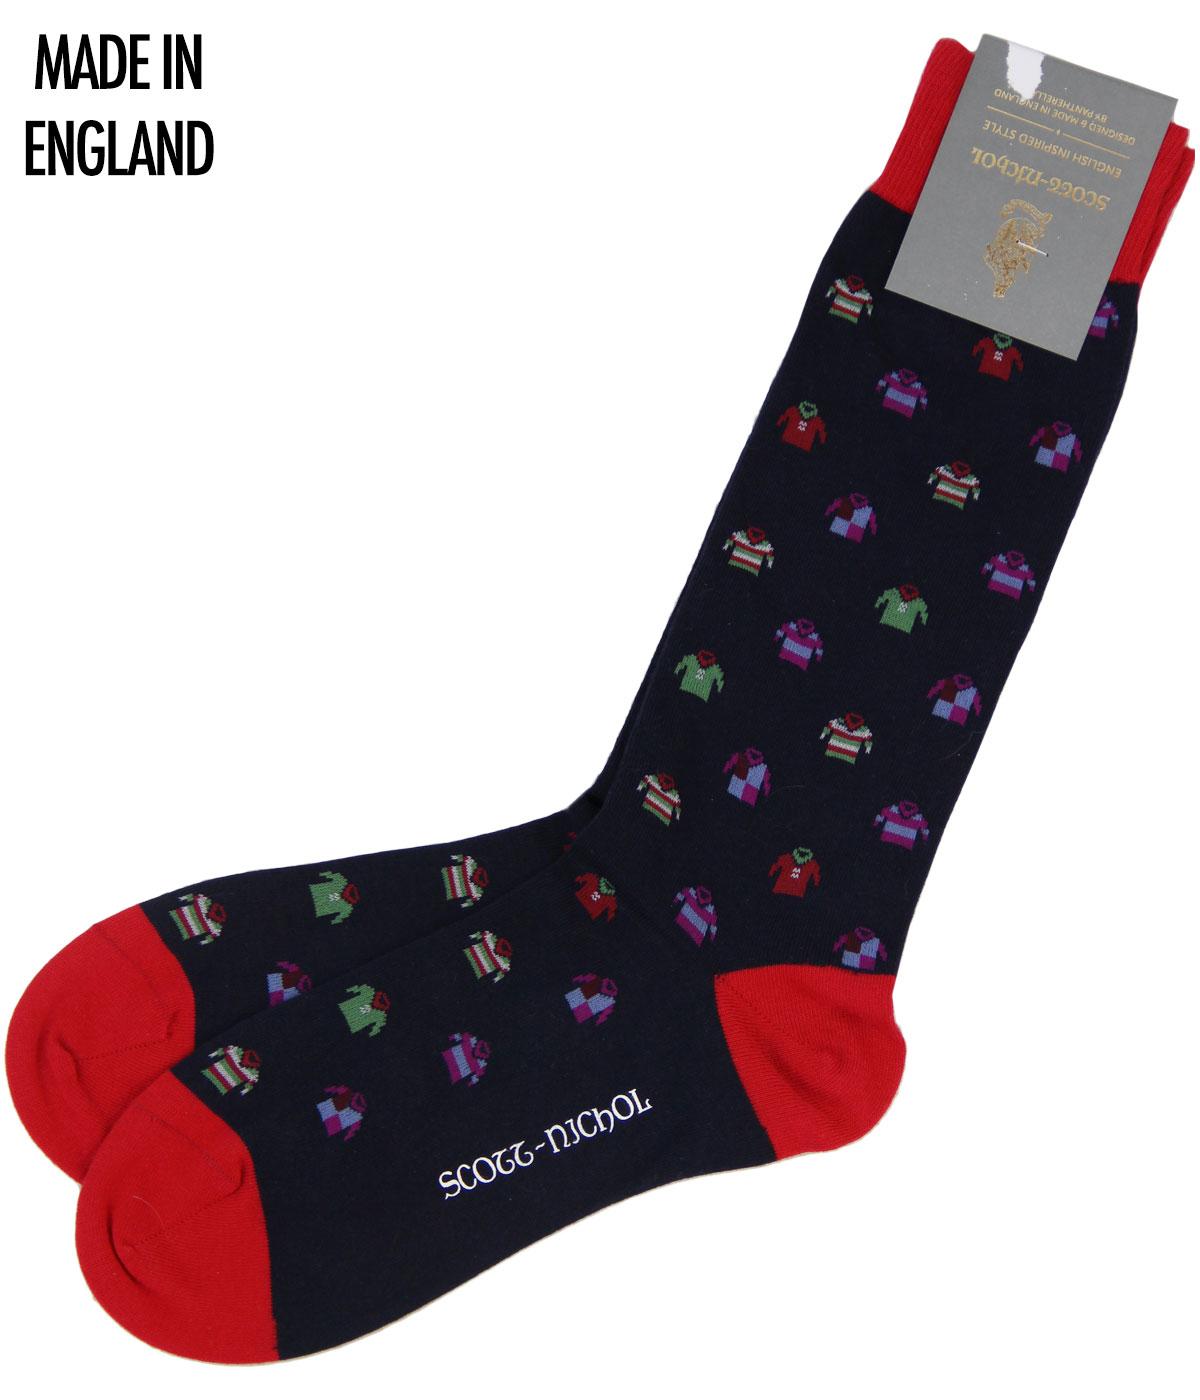 + Sedgley SCOTT-NICHOL Retro Rugby Shirts Socks